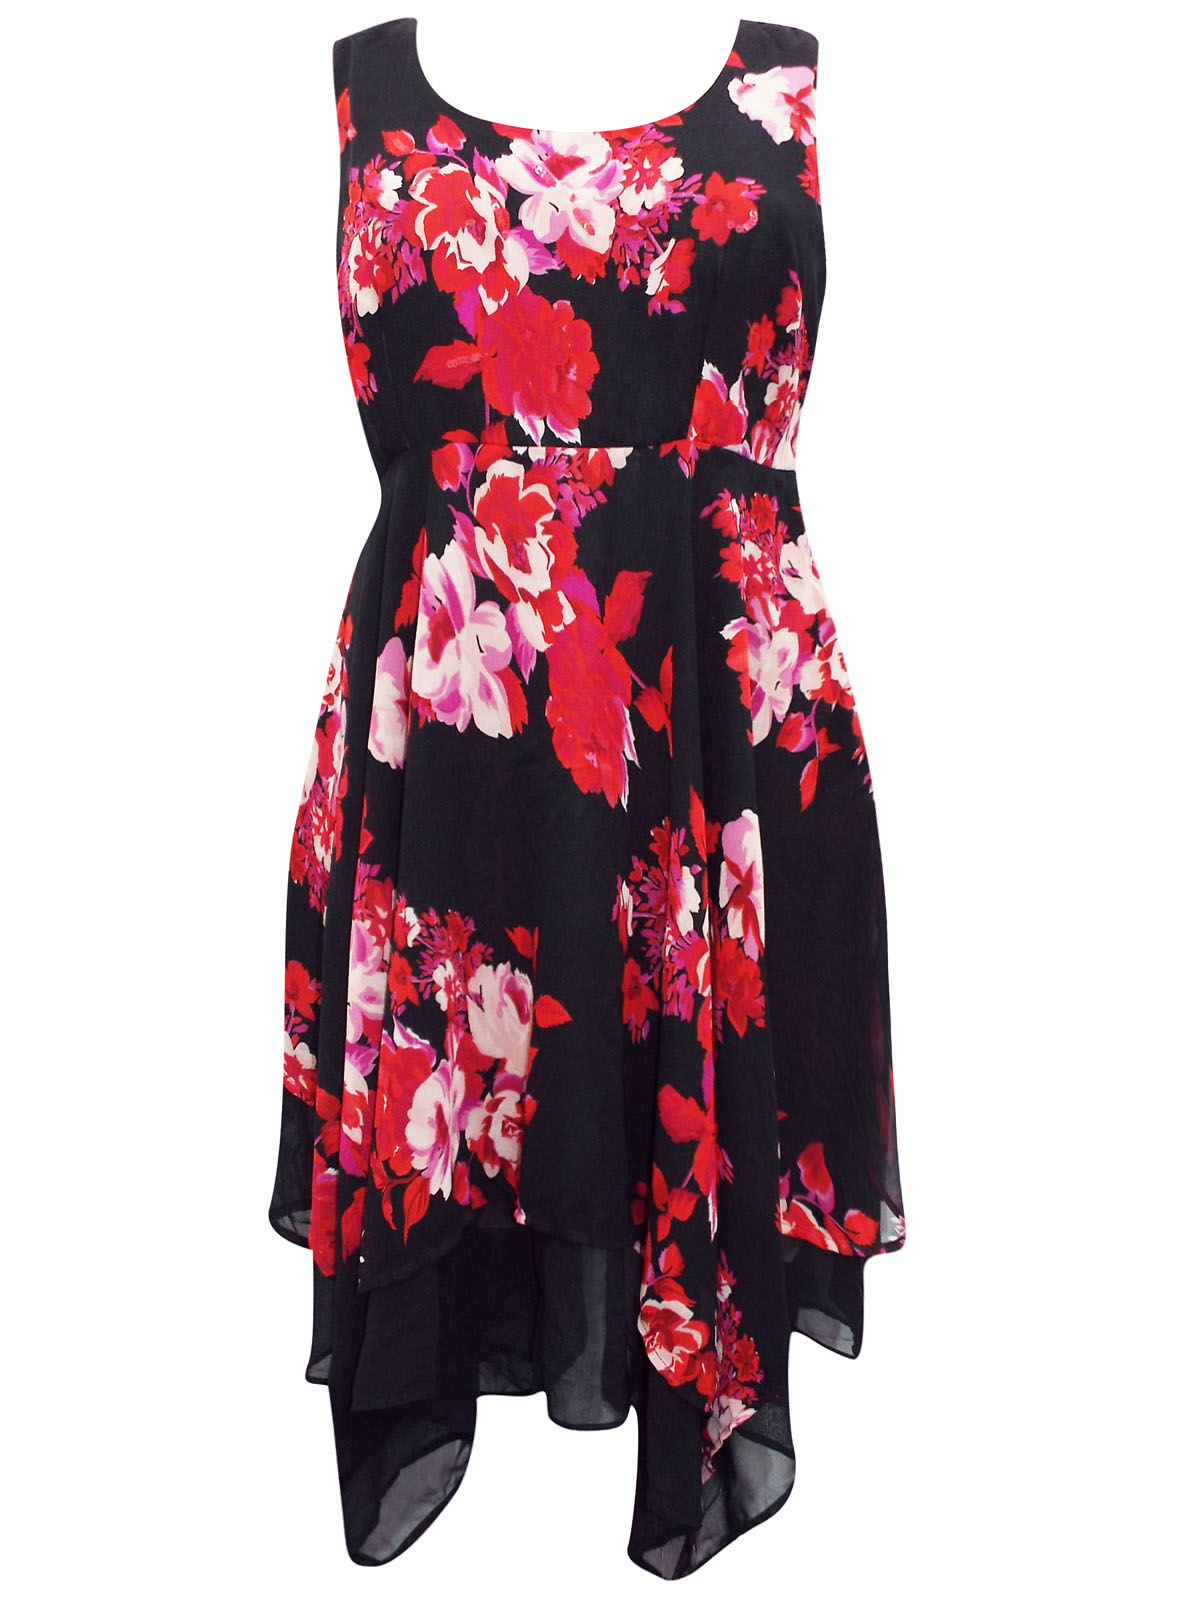 CURVE - - BLACK Floral Print Hanky Hem Dress - Plus Size 12 to 20